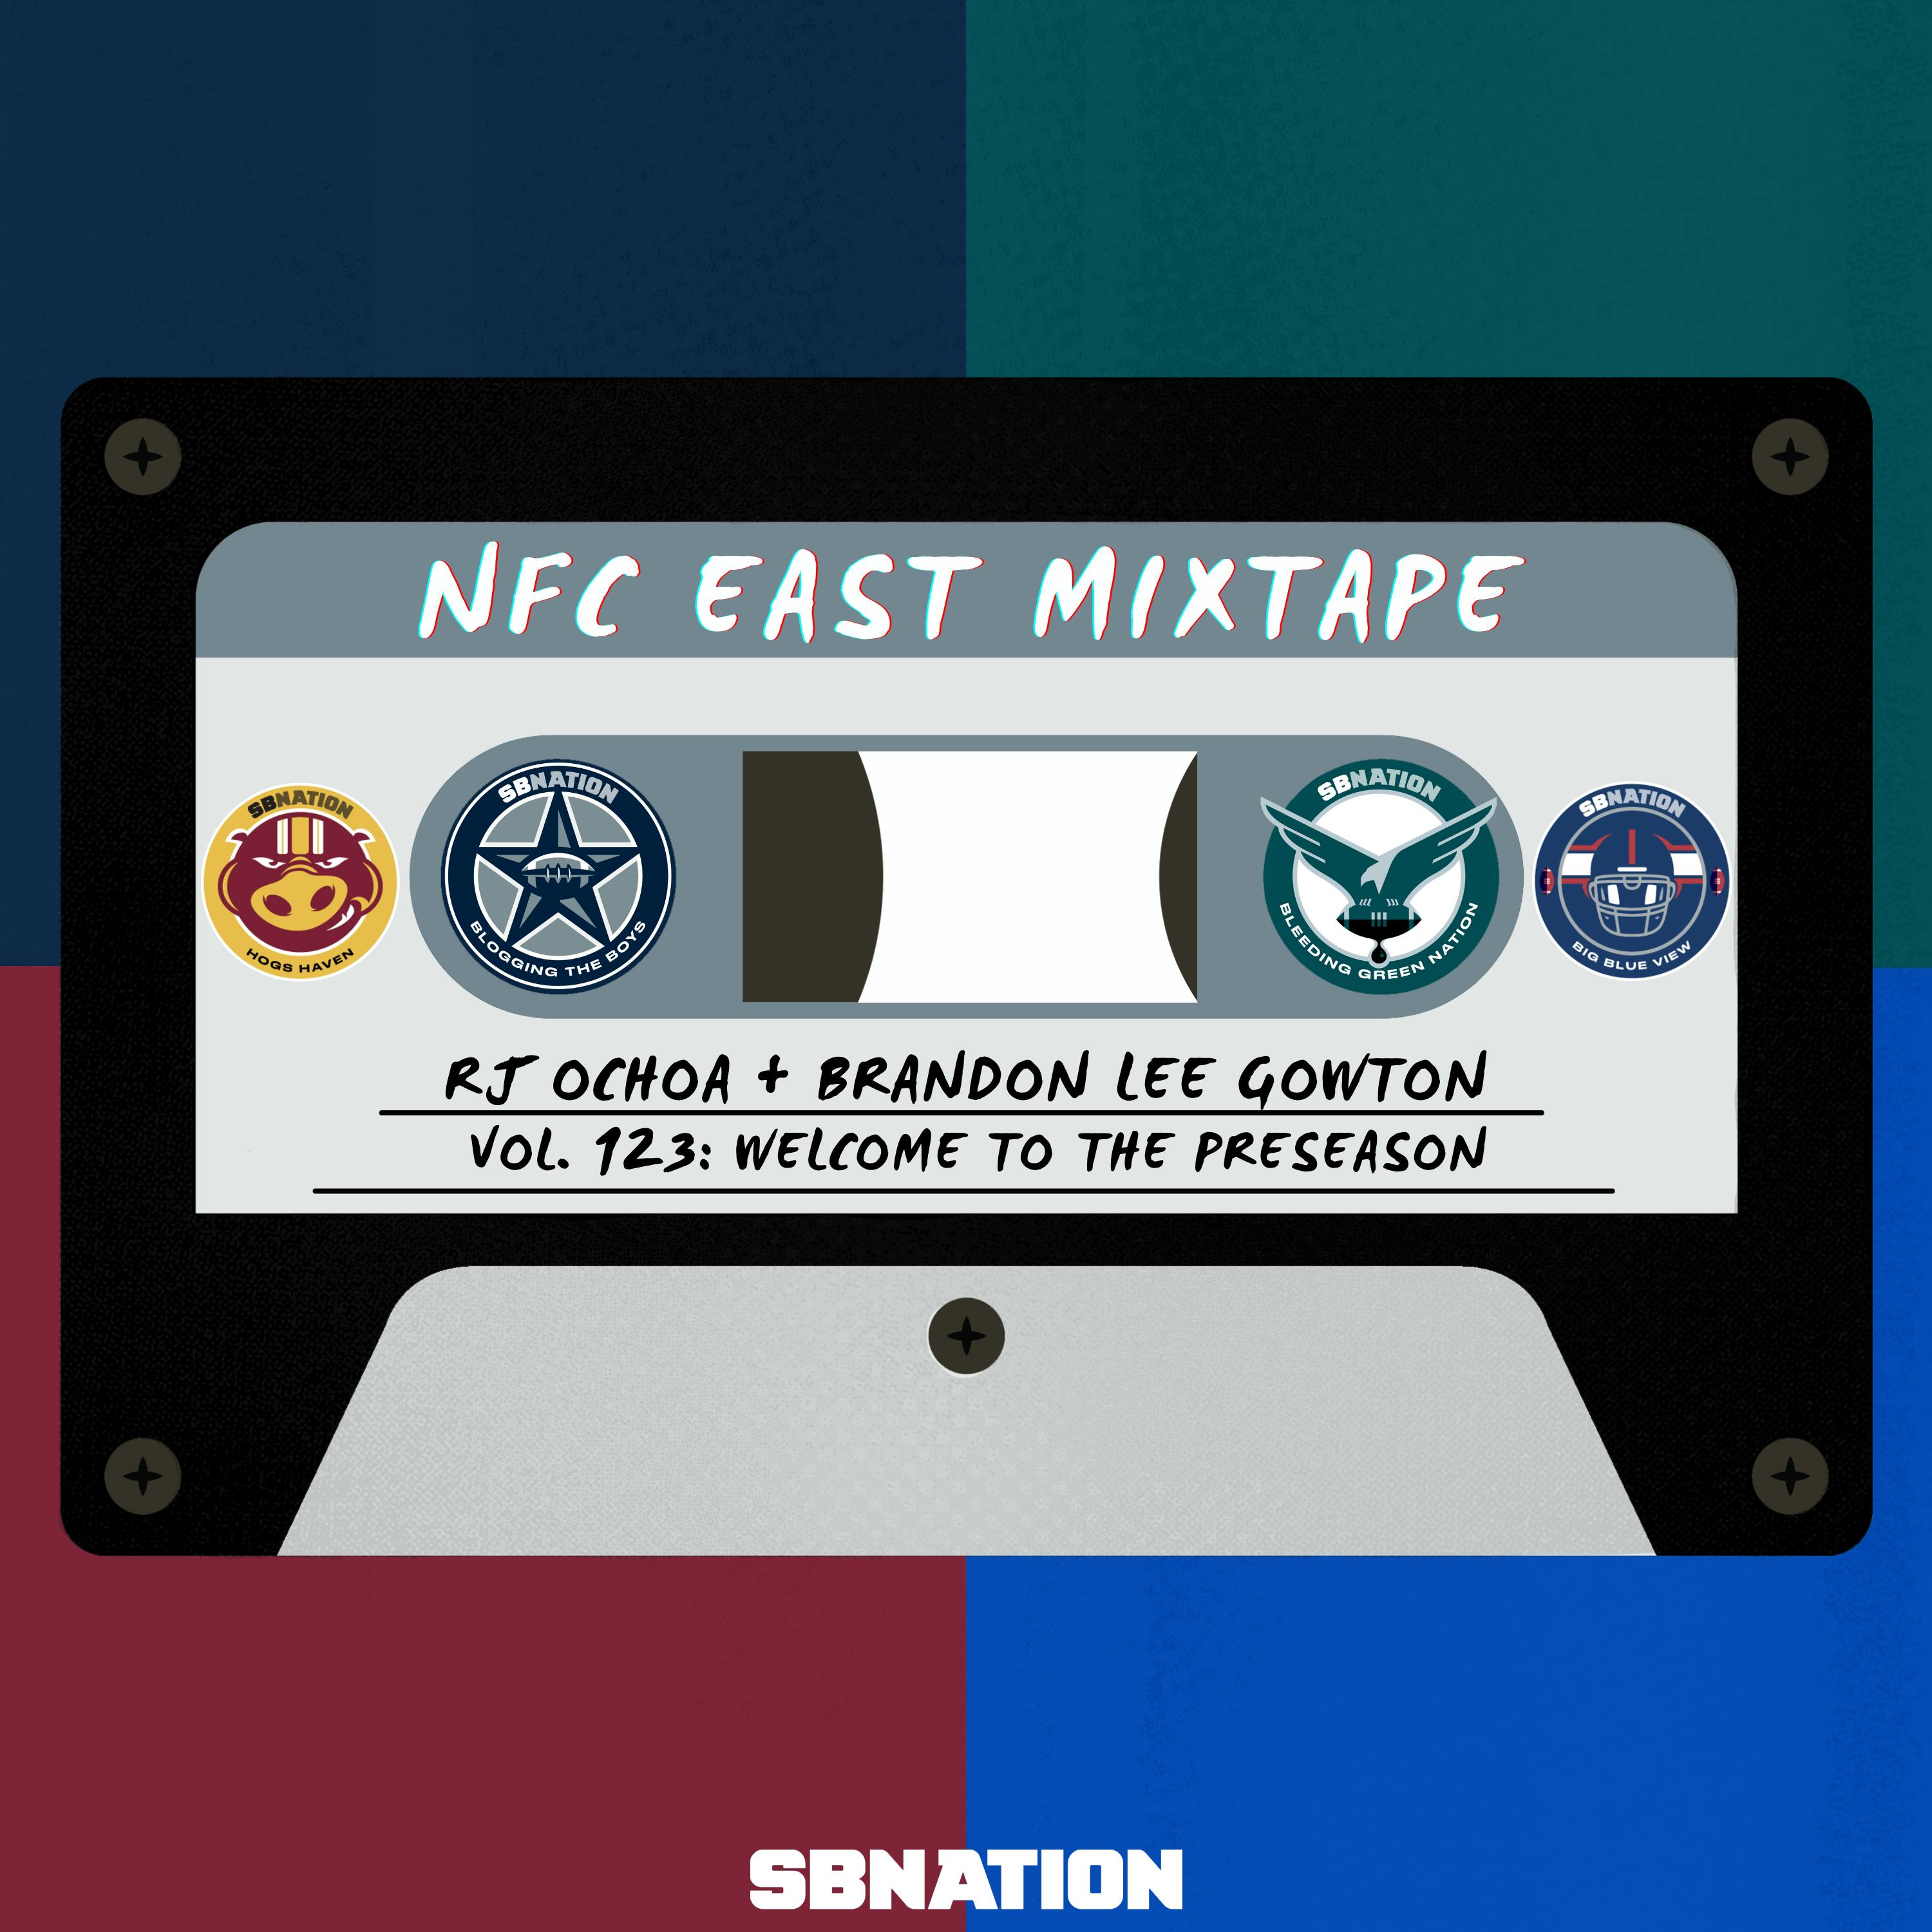 NFC East Mixtape Vol.123: Welcome to the preseason